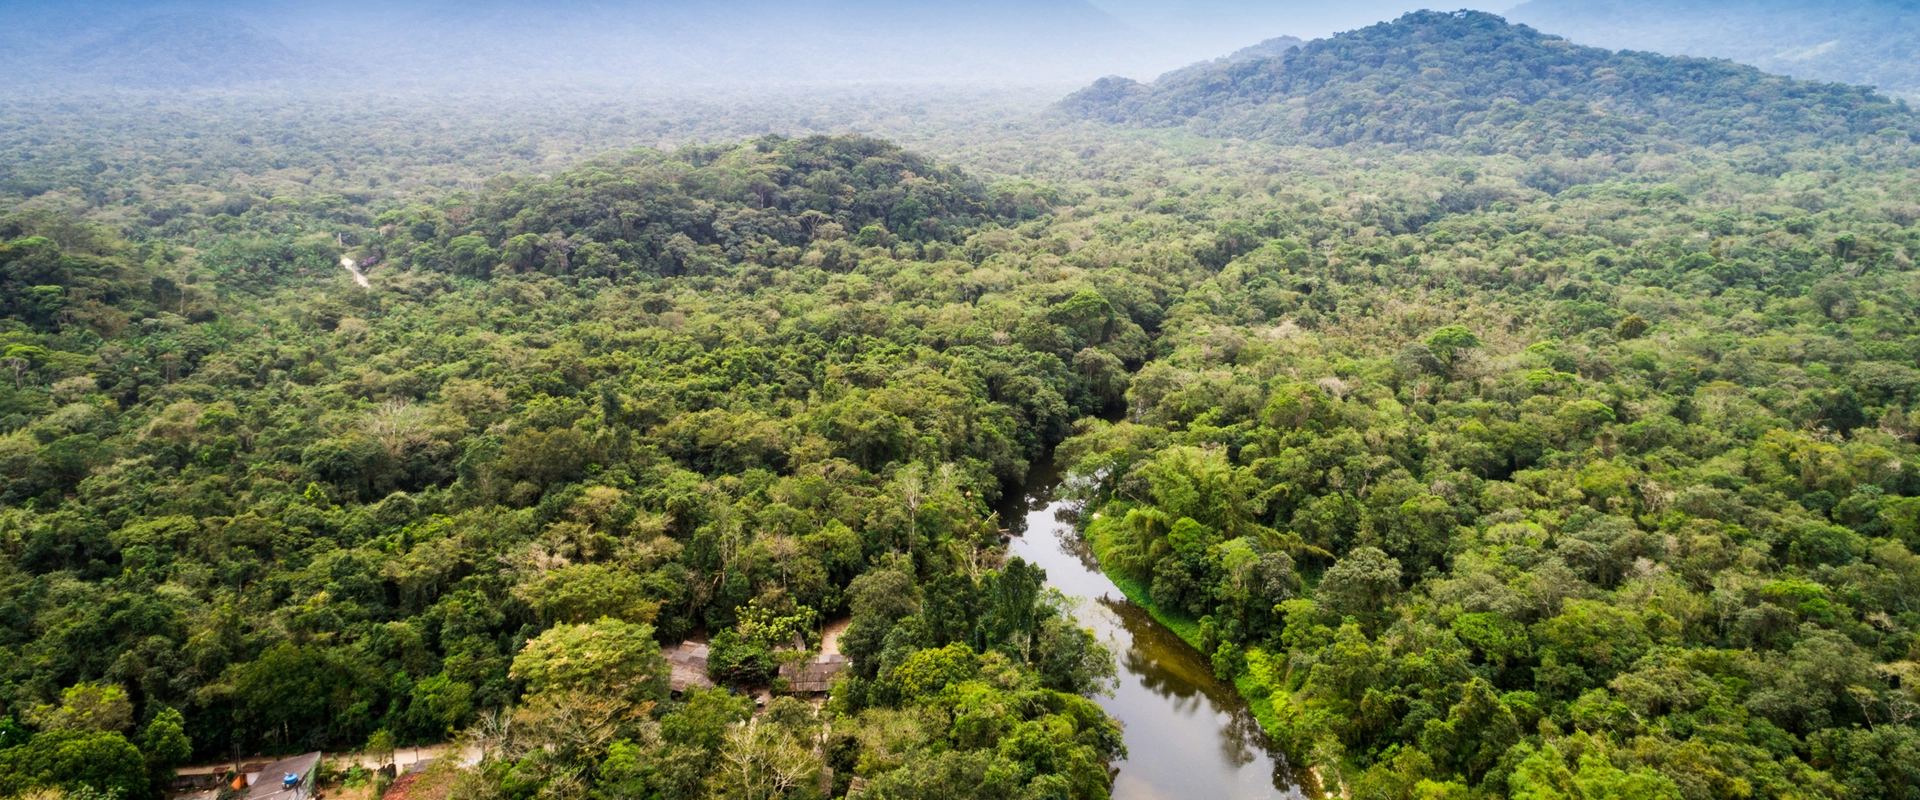 voyage organise equateur amazonie